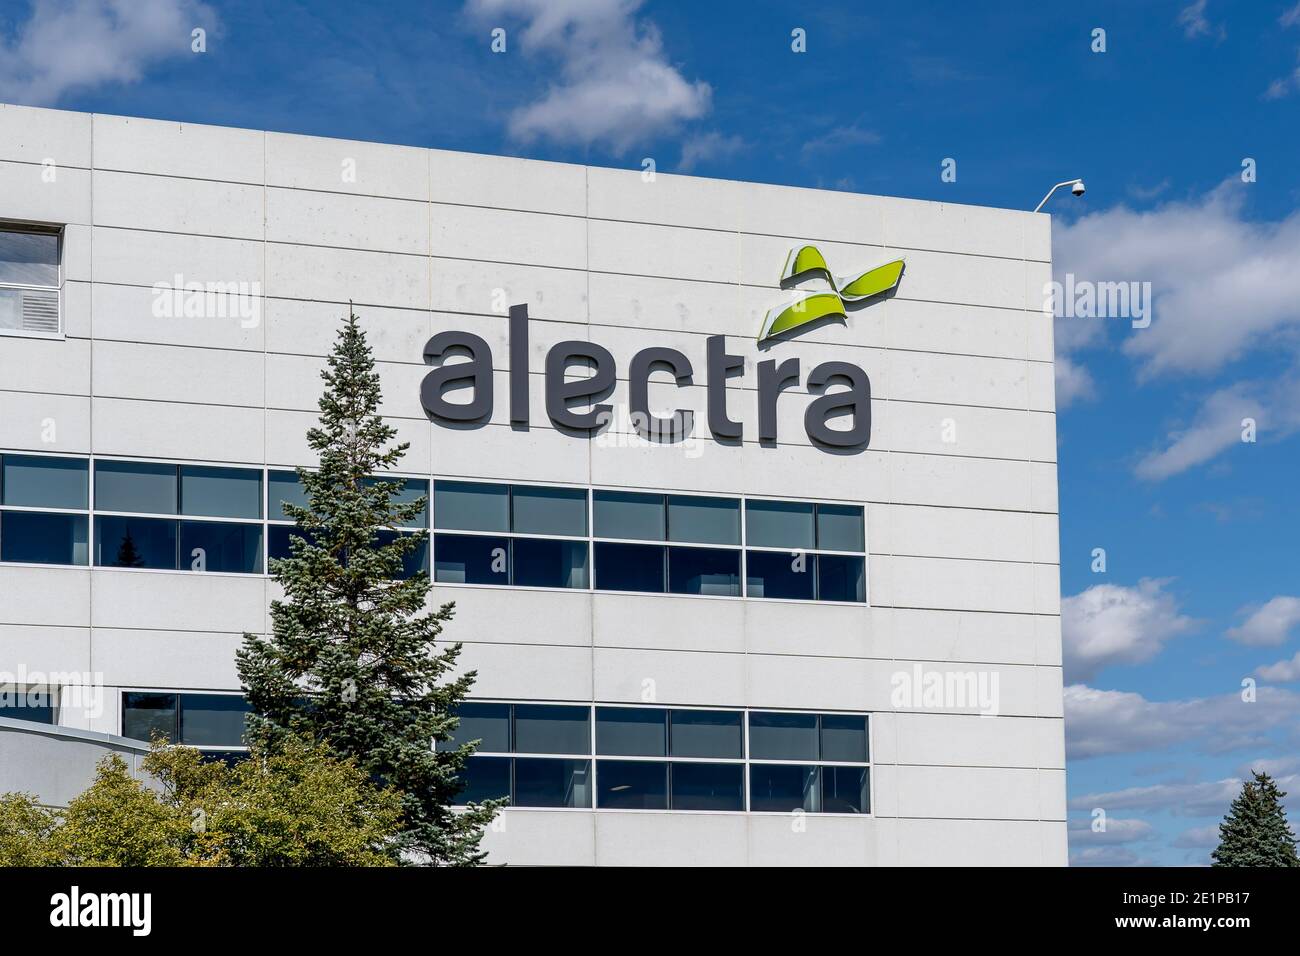 Brampton, On, Canada - September 19, 2020: Close up of Alectra sign on building in Brampton, On, Canada on September 19, 2020. Stock Photo